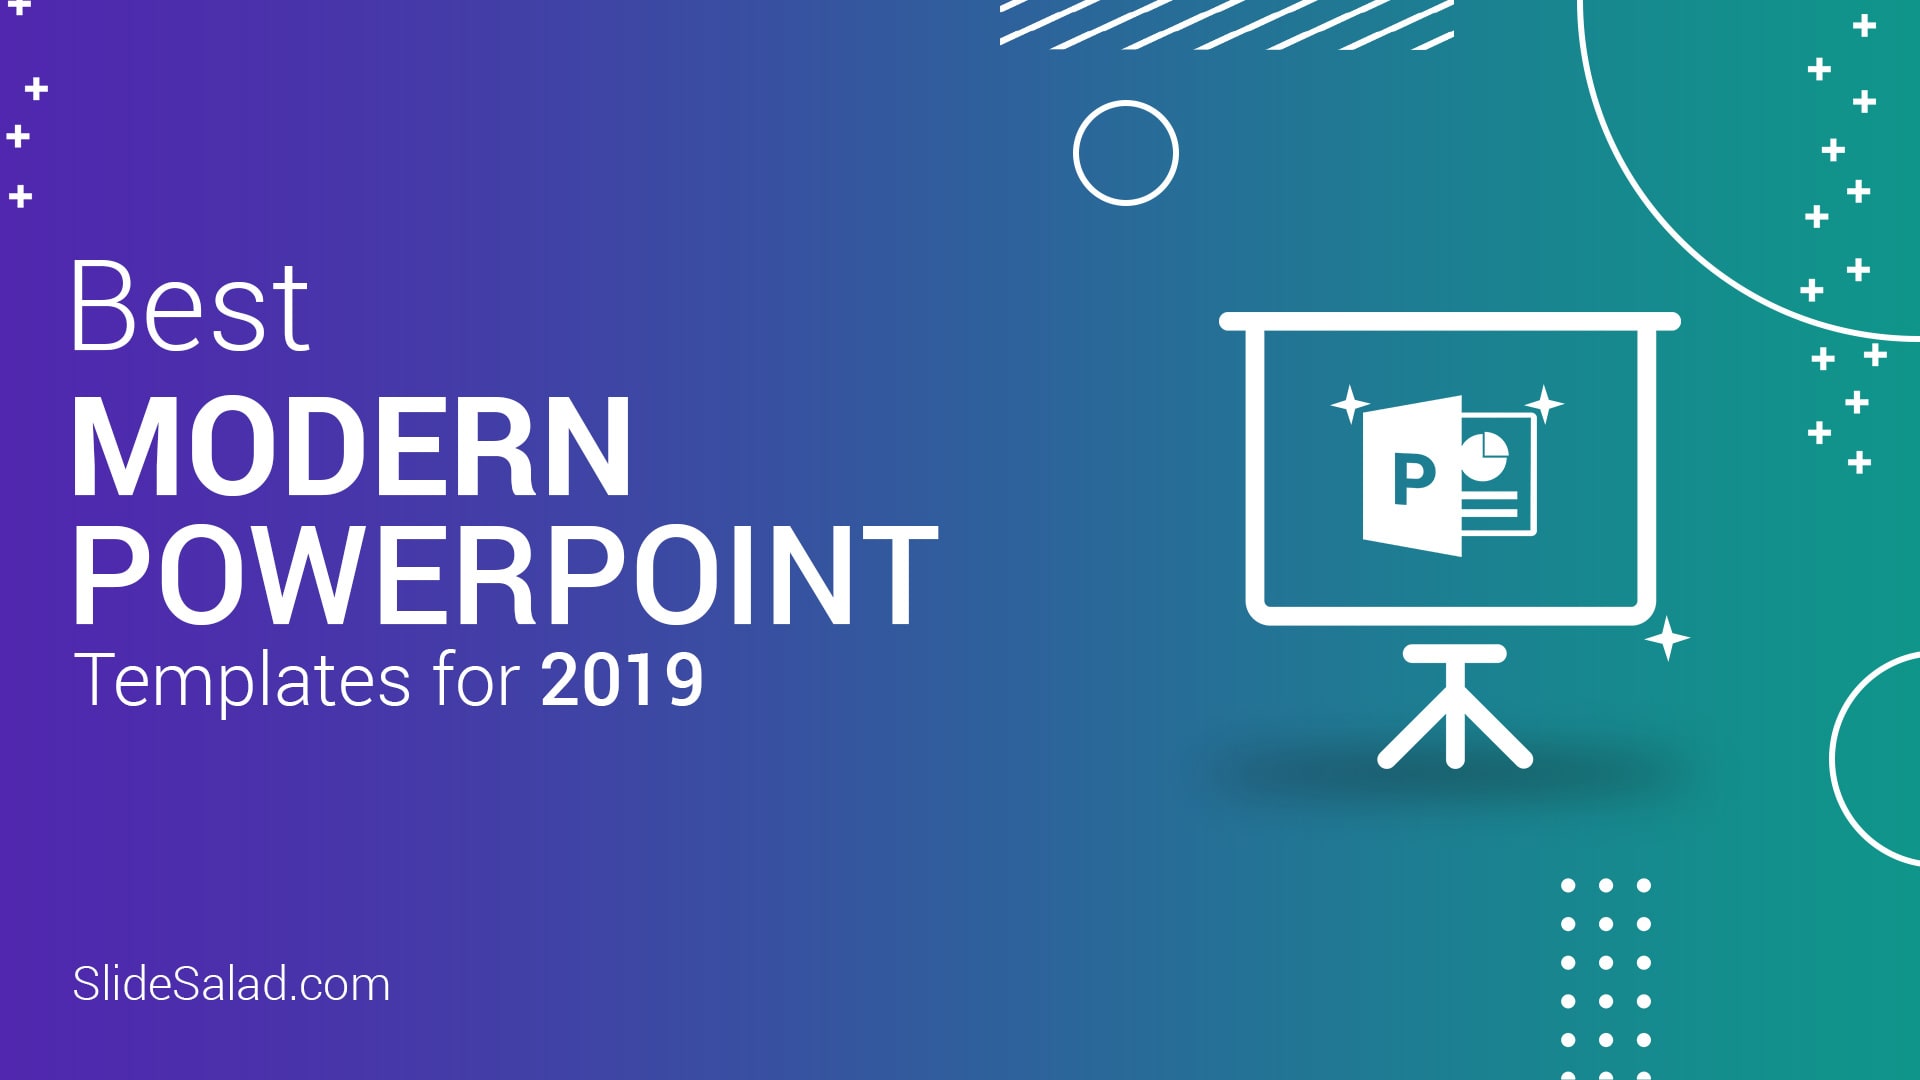 Best Modern PowerPoint Templates for 2021 - SlideSalad